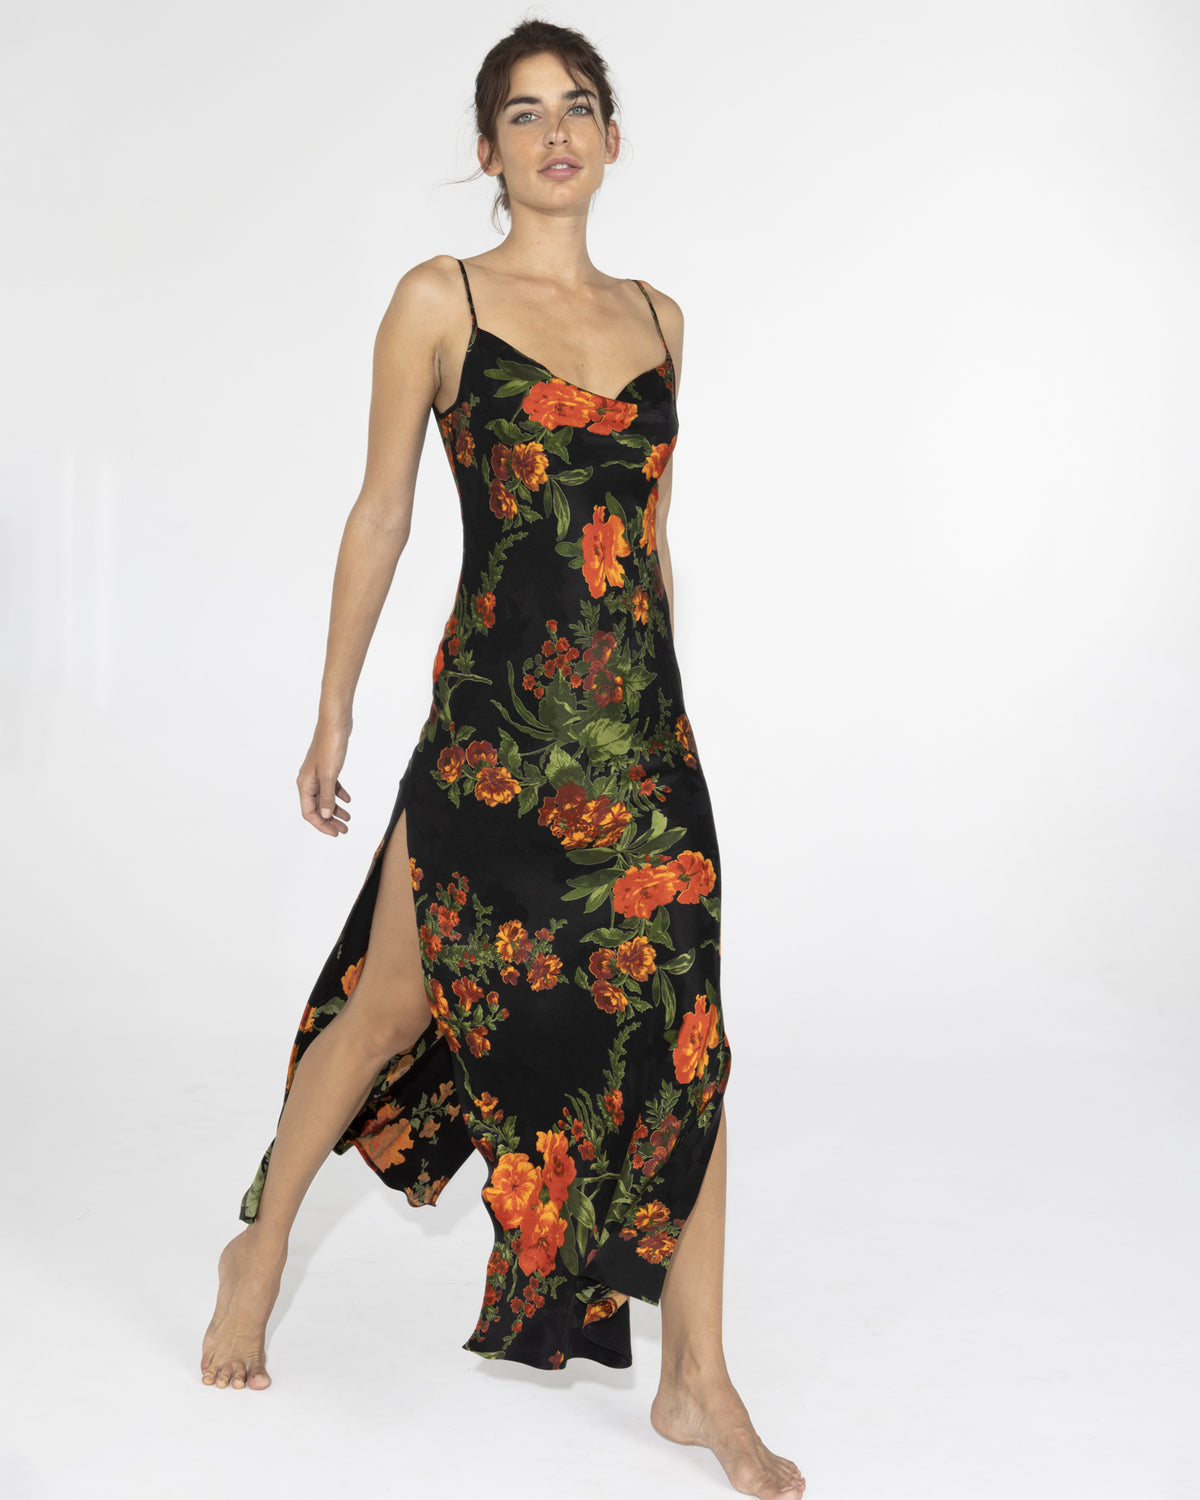 niLuu Women's Slip Dress CHARLOTTE OLIVIA Size S